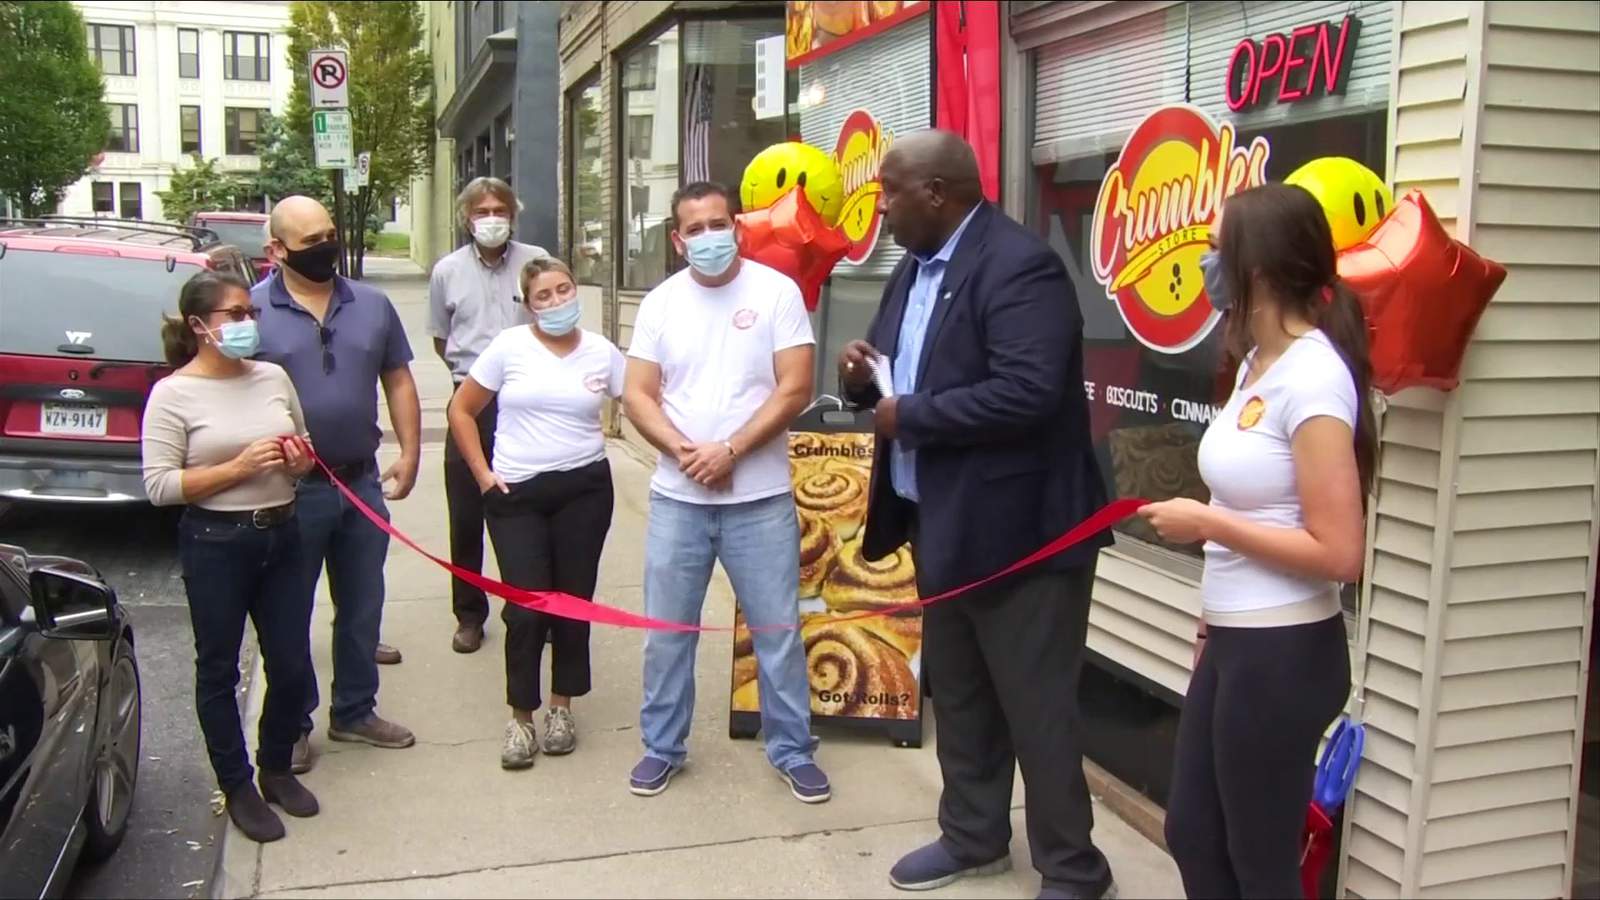 Roanoke restaurant that opened as coronavirus pandemic began finally has its grand opening